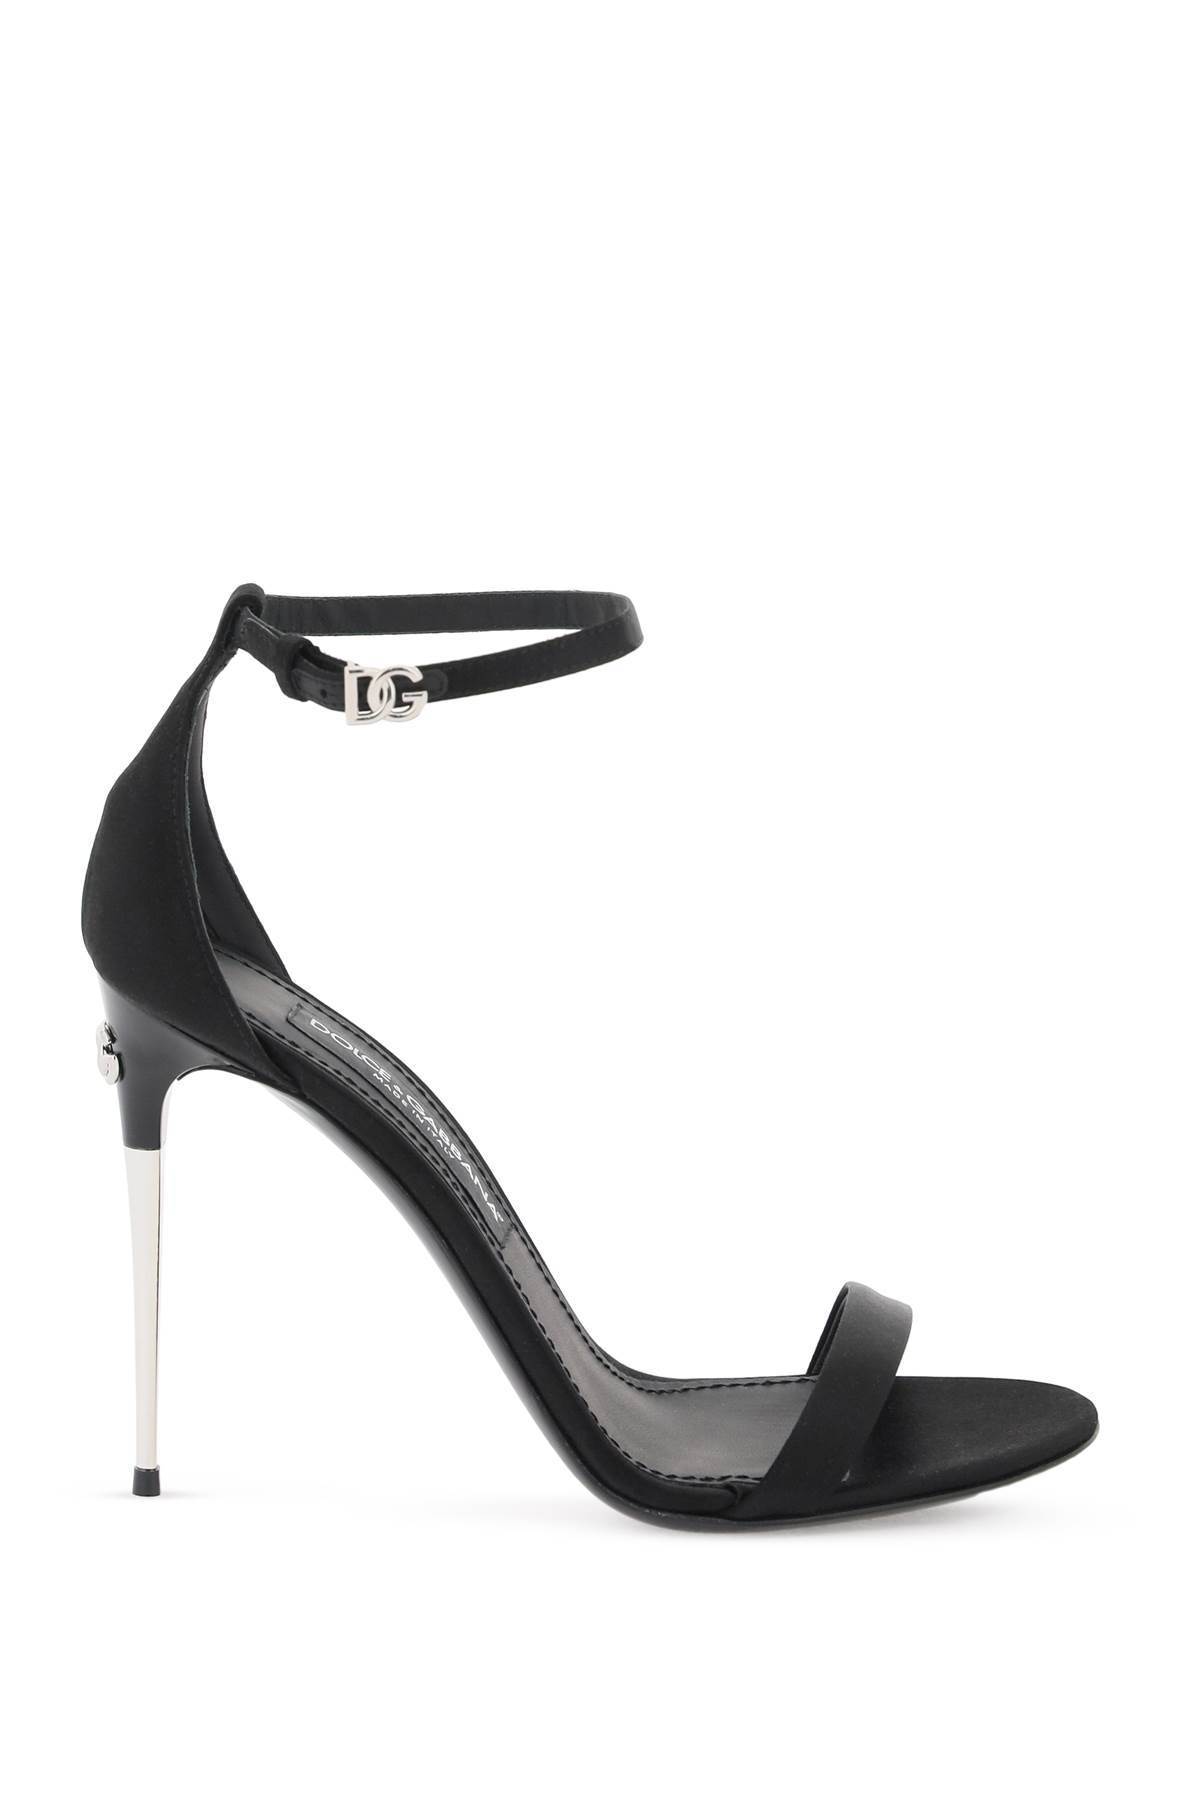 Dolce & Gabbana DOLCE & GABBANA satin sandals for elegant